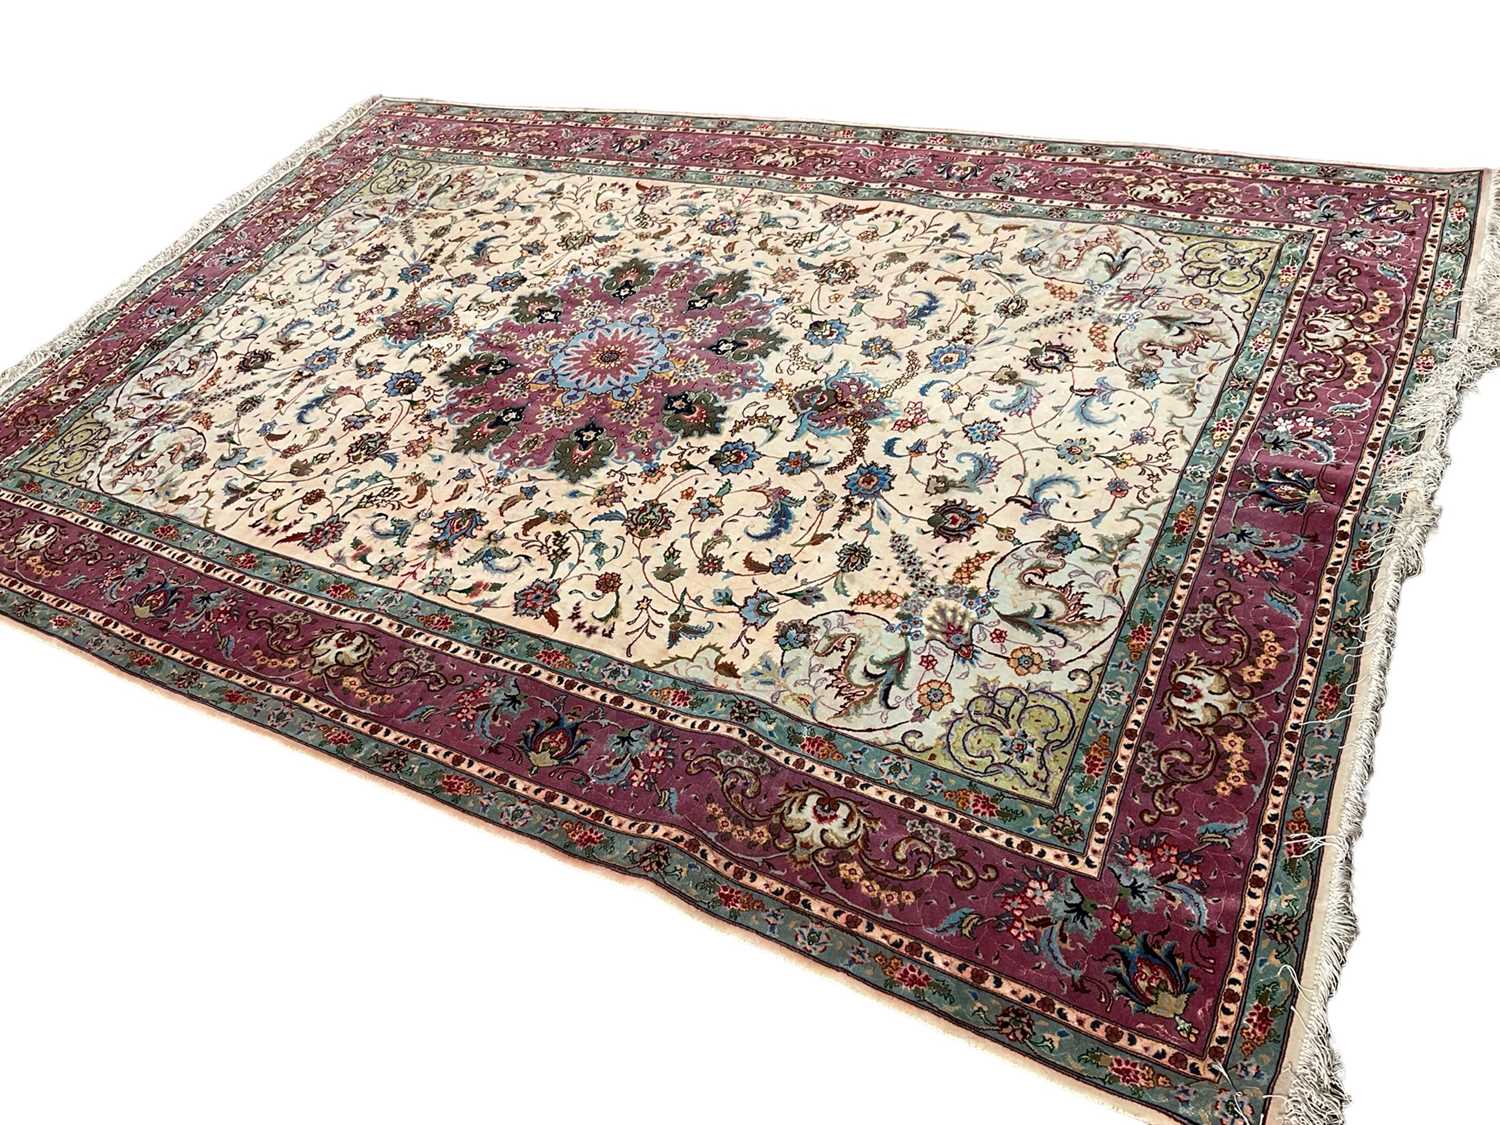 Good quality Tabriz part silk rug, approximately 200cm x 300cm